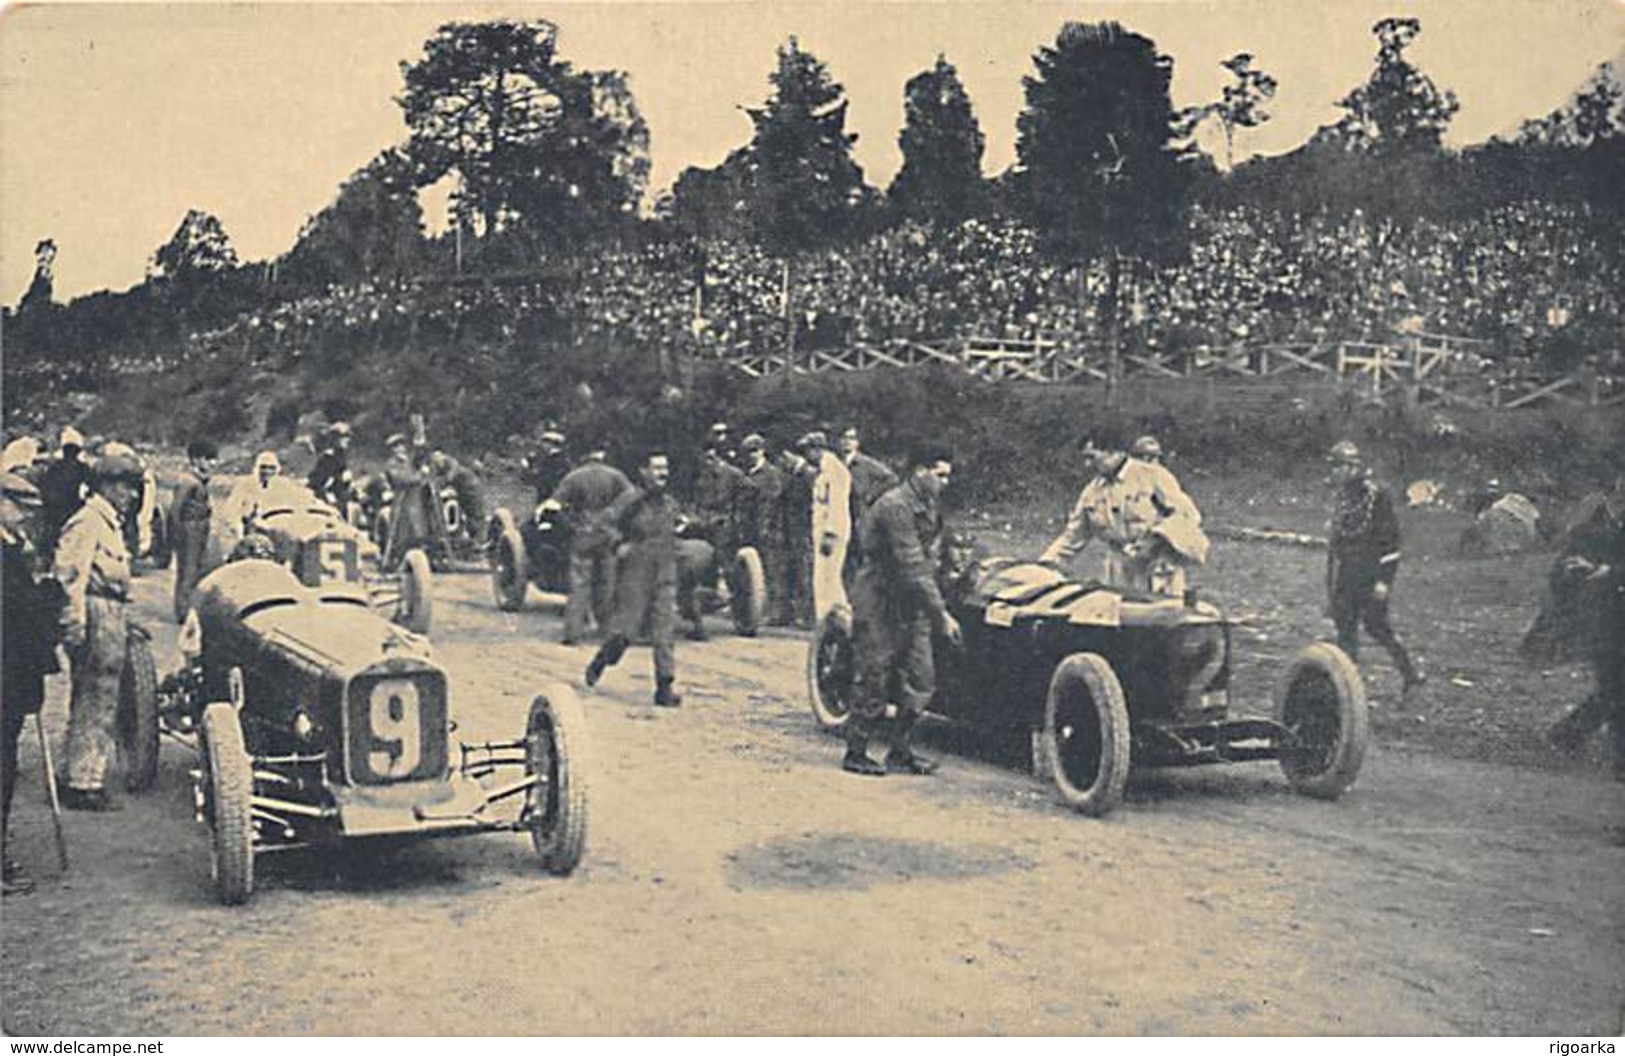 GRAN PREMIO DE EUROPA 1925 (SPA).- LOS COCHES PARTICULARES ALINENDOSE PARA TOMAR LA SALIDA. A LA DERECHA, ASCARI - Grand Prix / F1